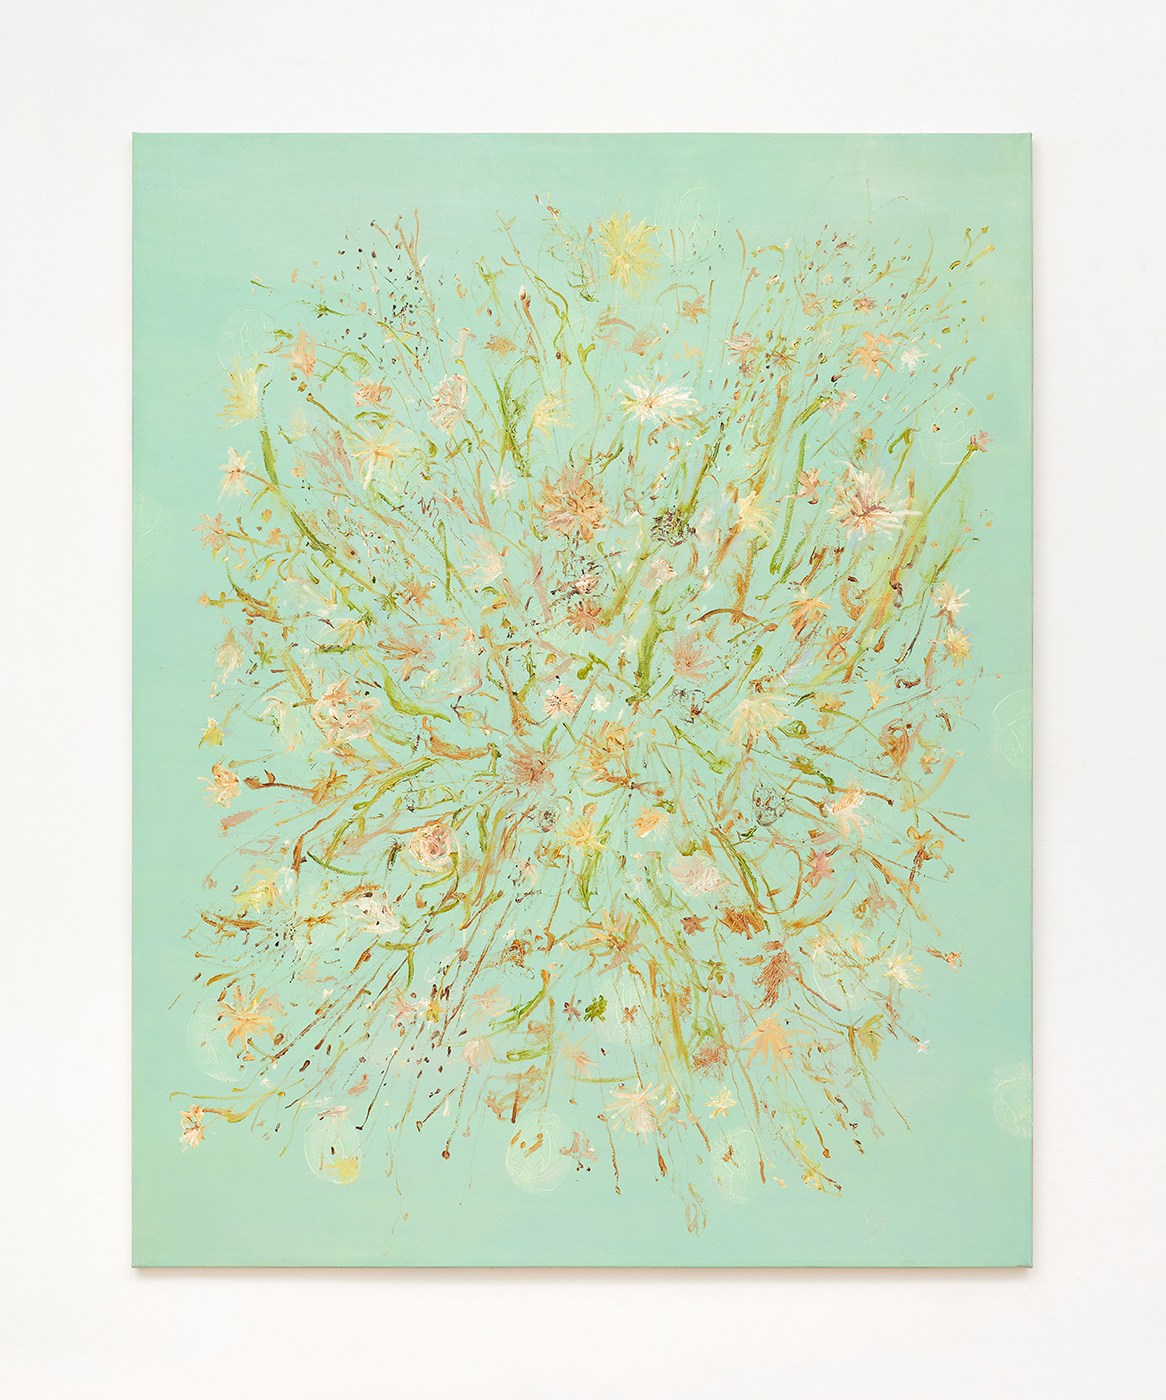 Dry Flowers, 2016, oil on canvas, 120 x 95 cm